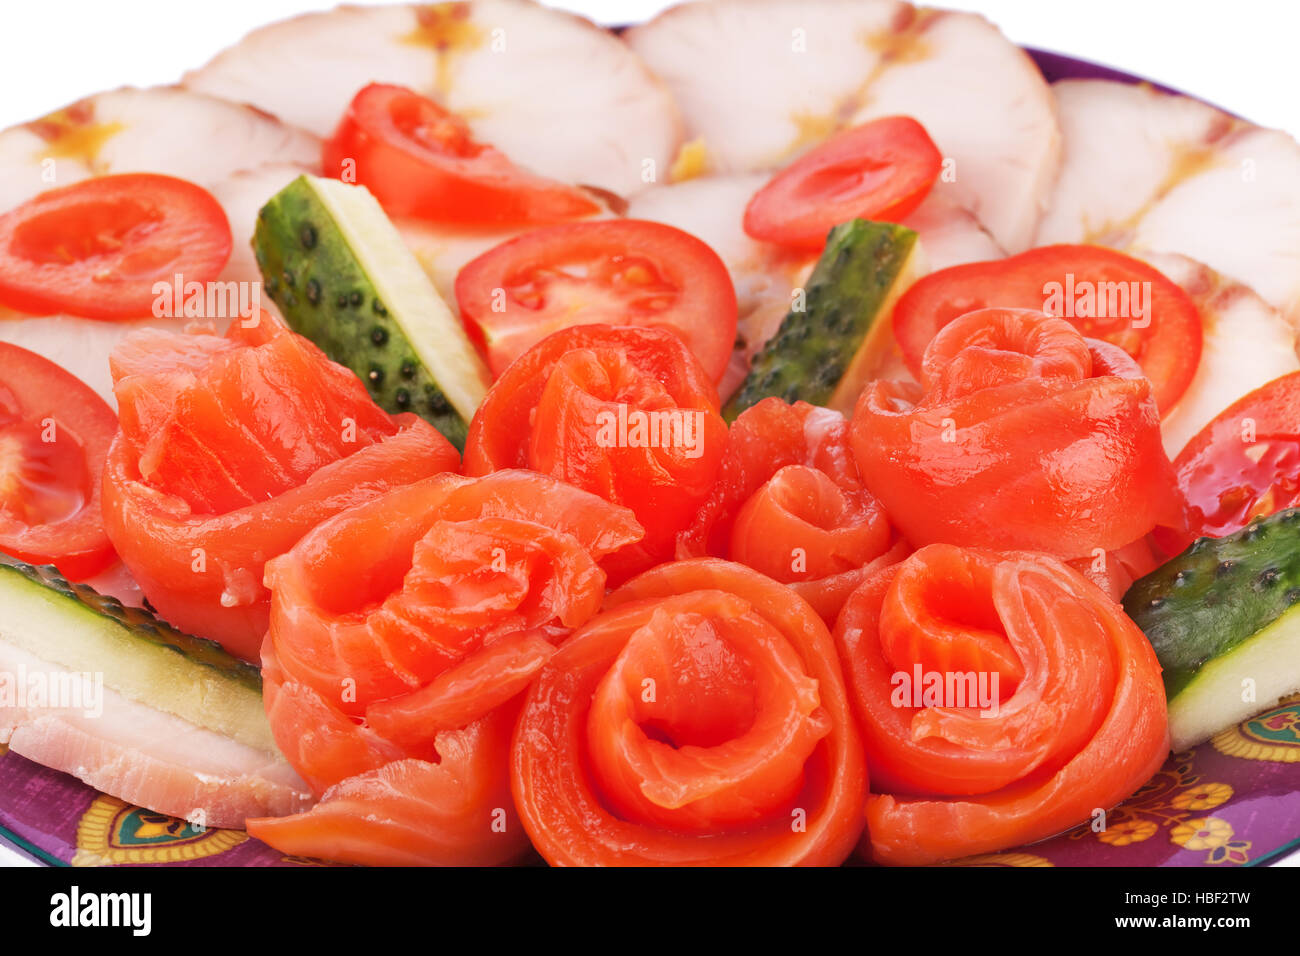 Plate of salmon and sturgeon fish Stock Photo